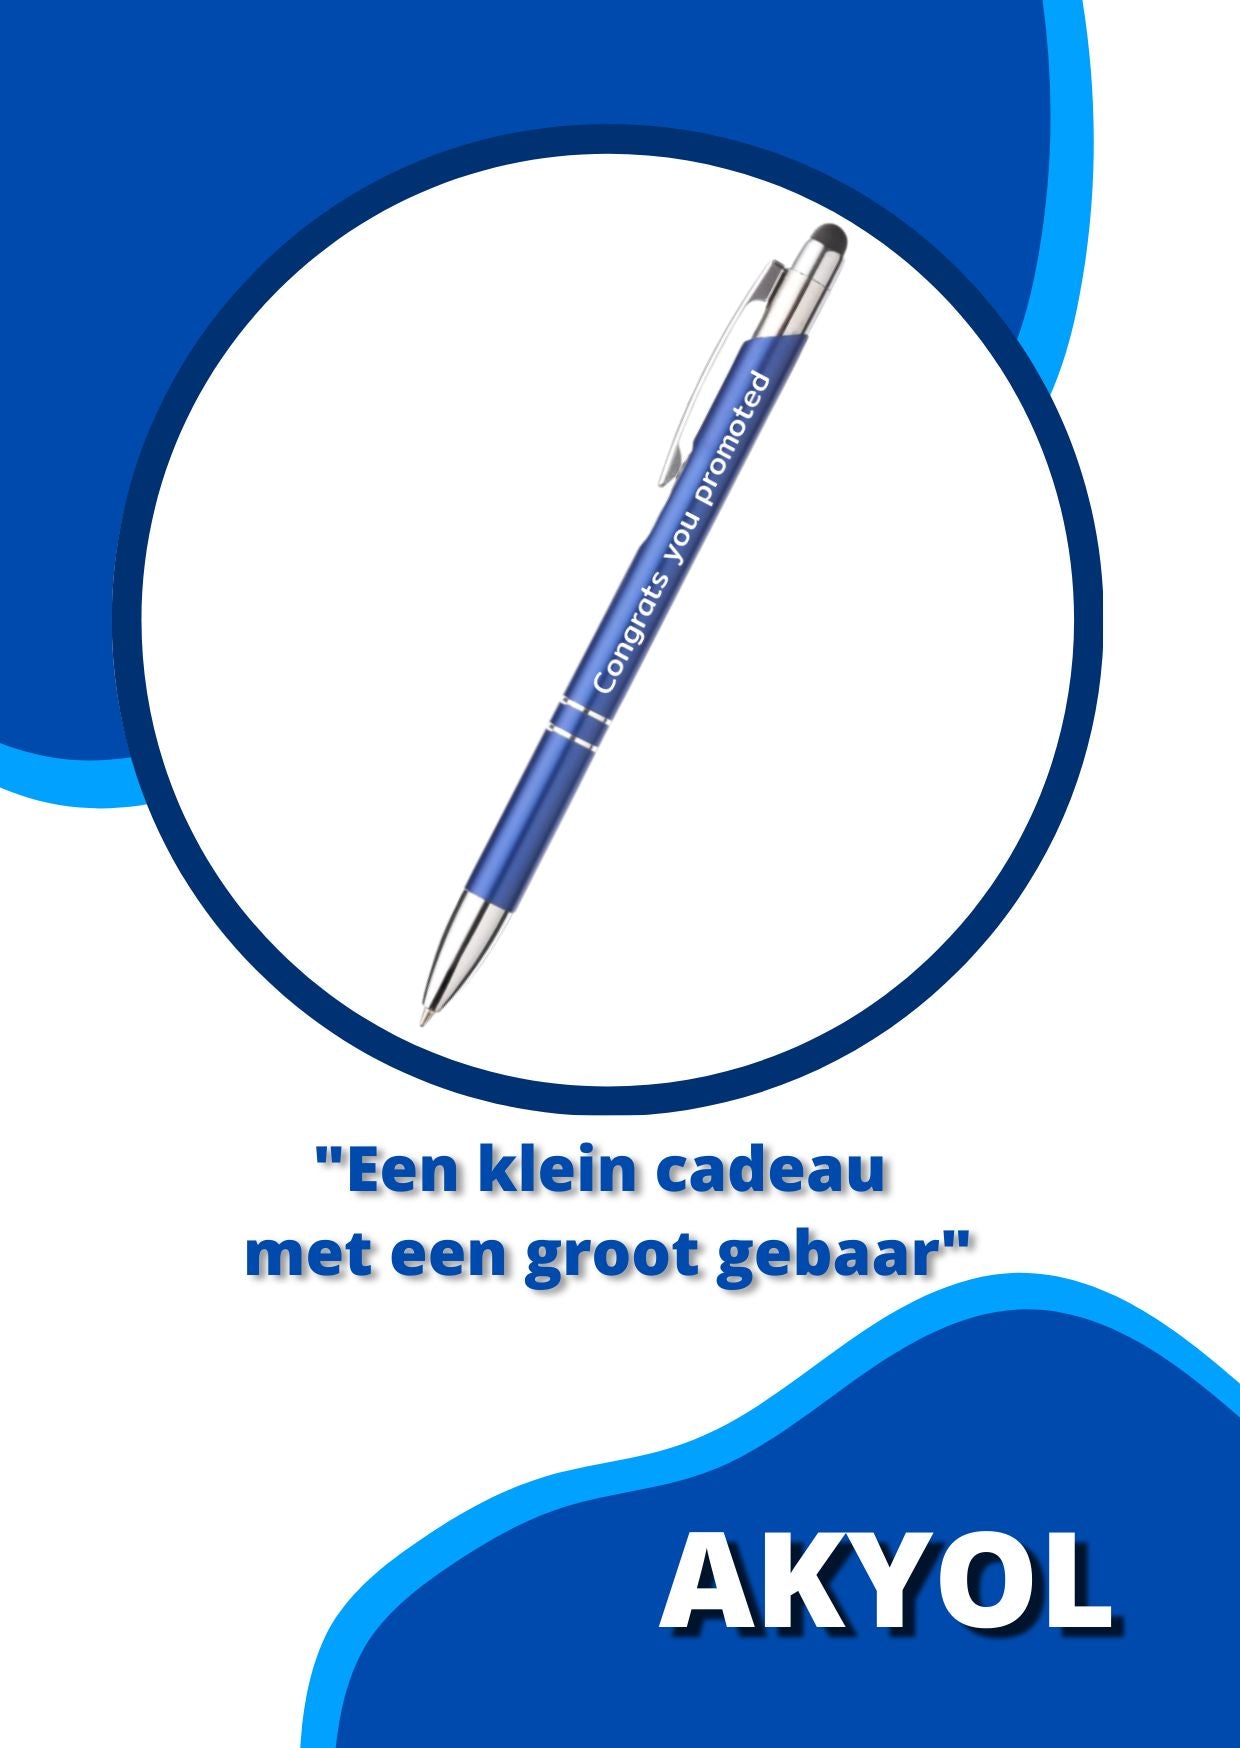 congrats you promoted pen - gegraveerd 🔵 🔴 ⚫